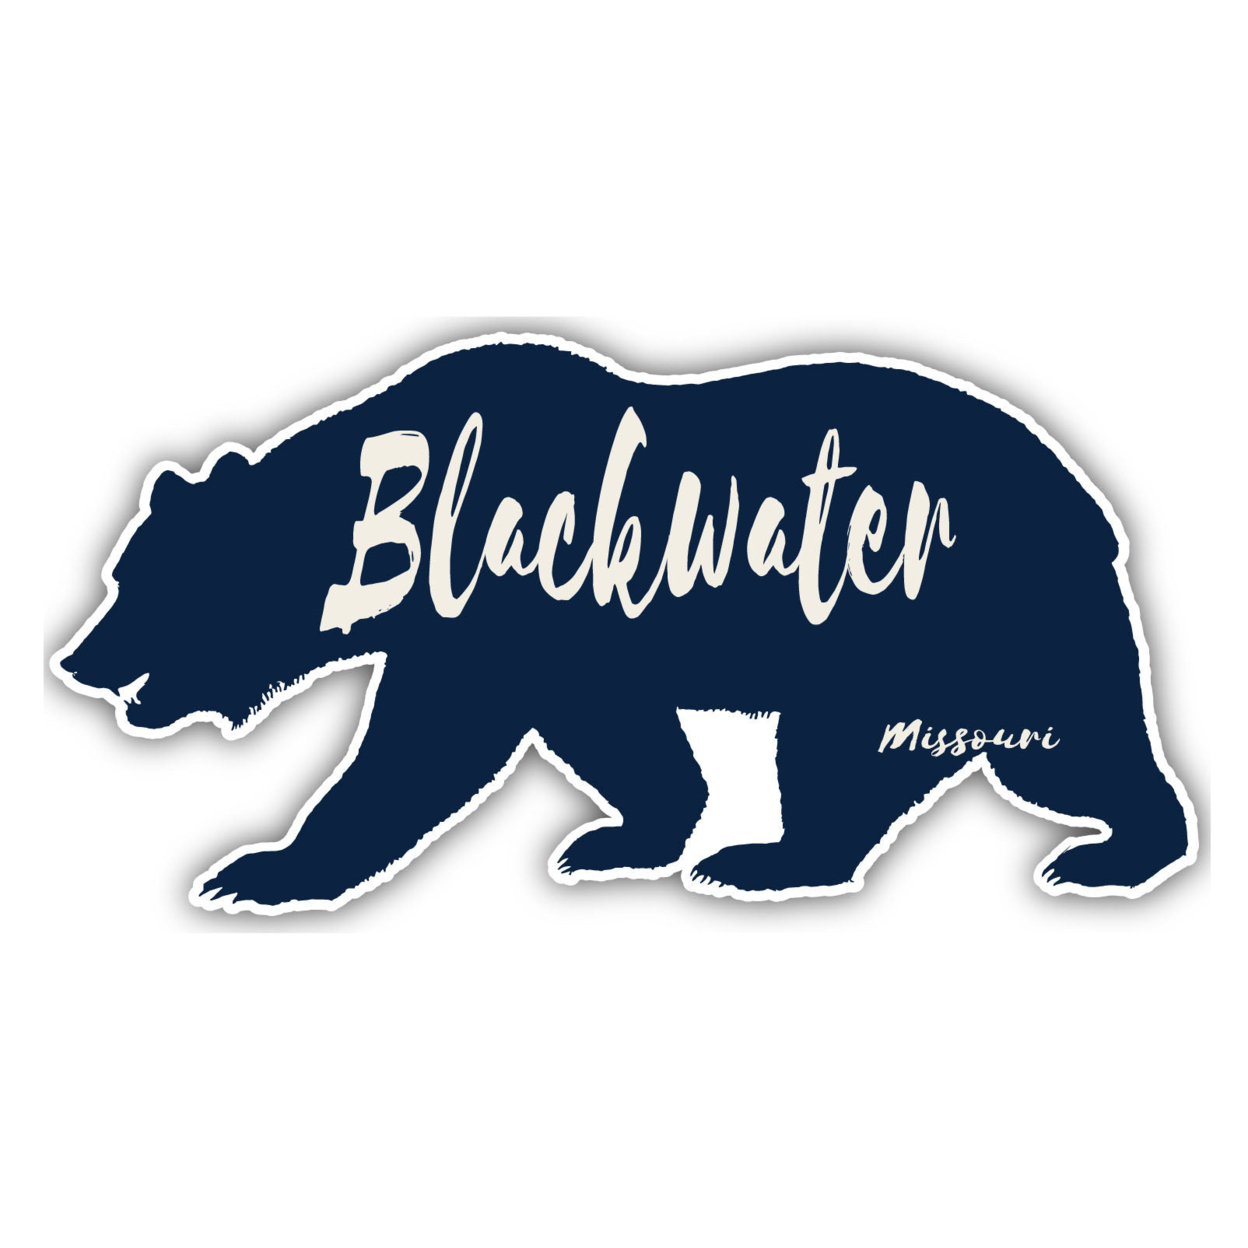 Blackwater Missouri Souvenir Decorative Stickers (Choose Theme And Size) - Single Unit, 2-Inch, Bear